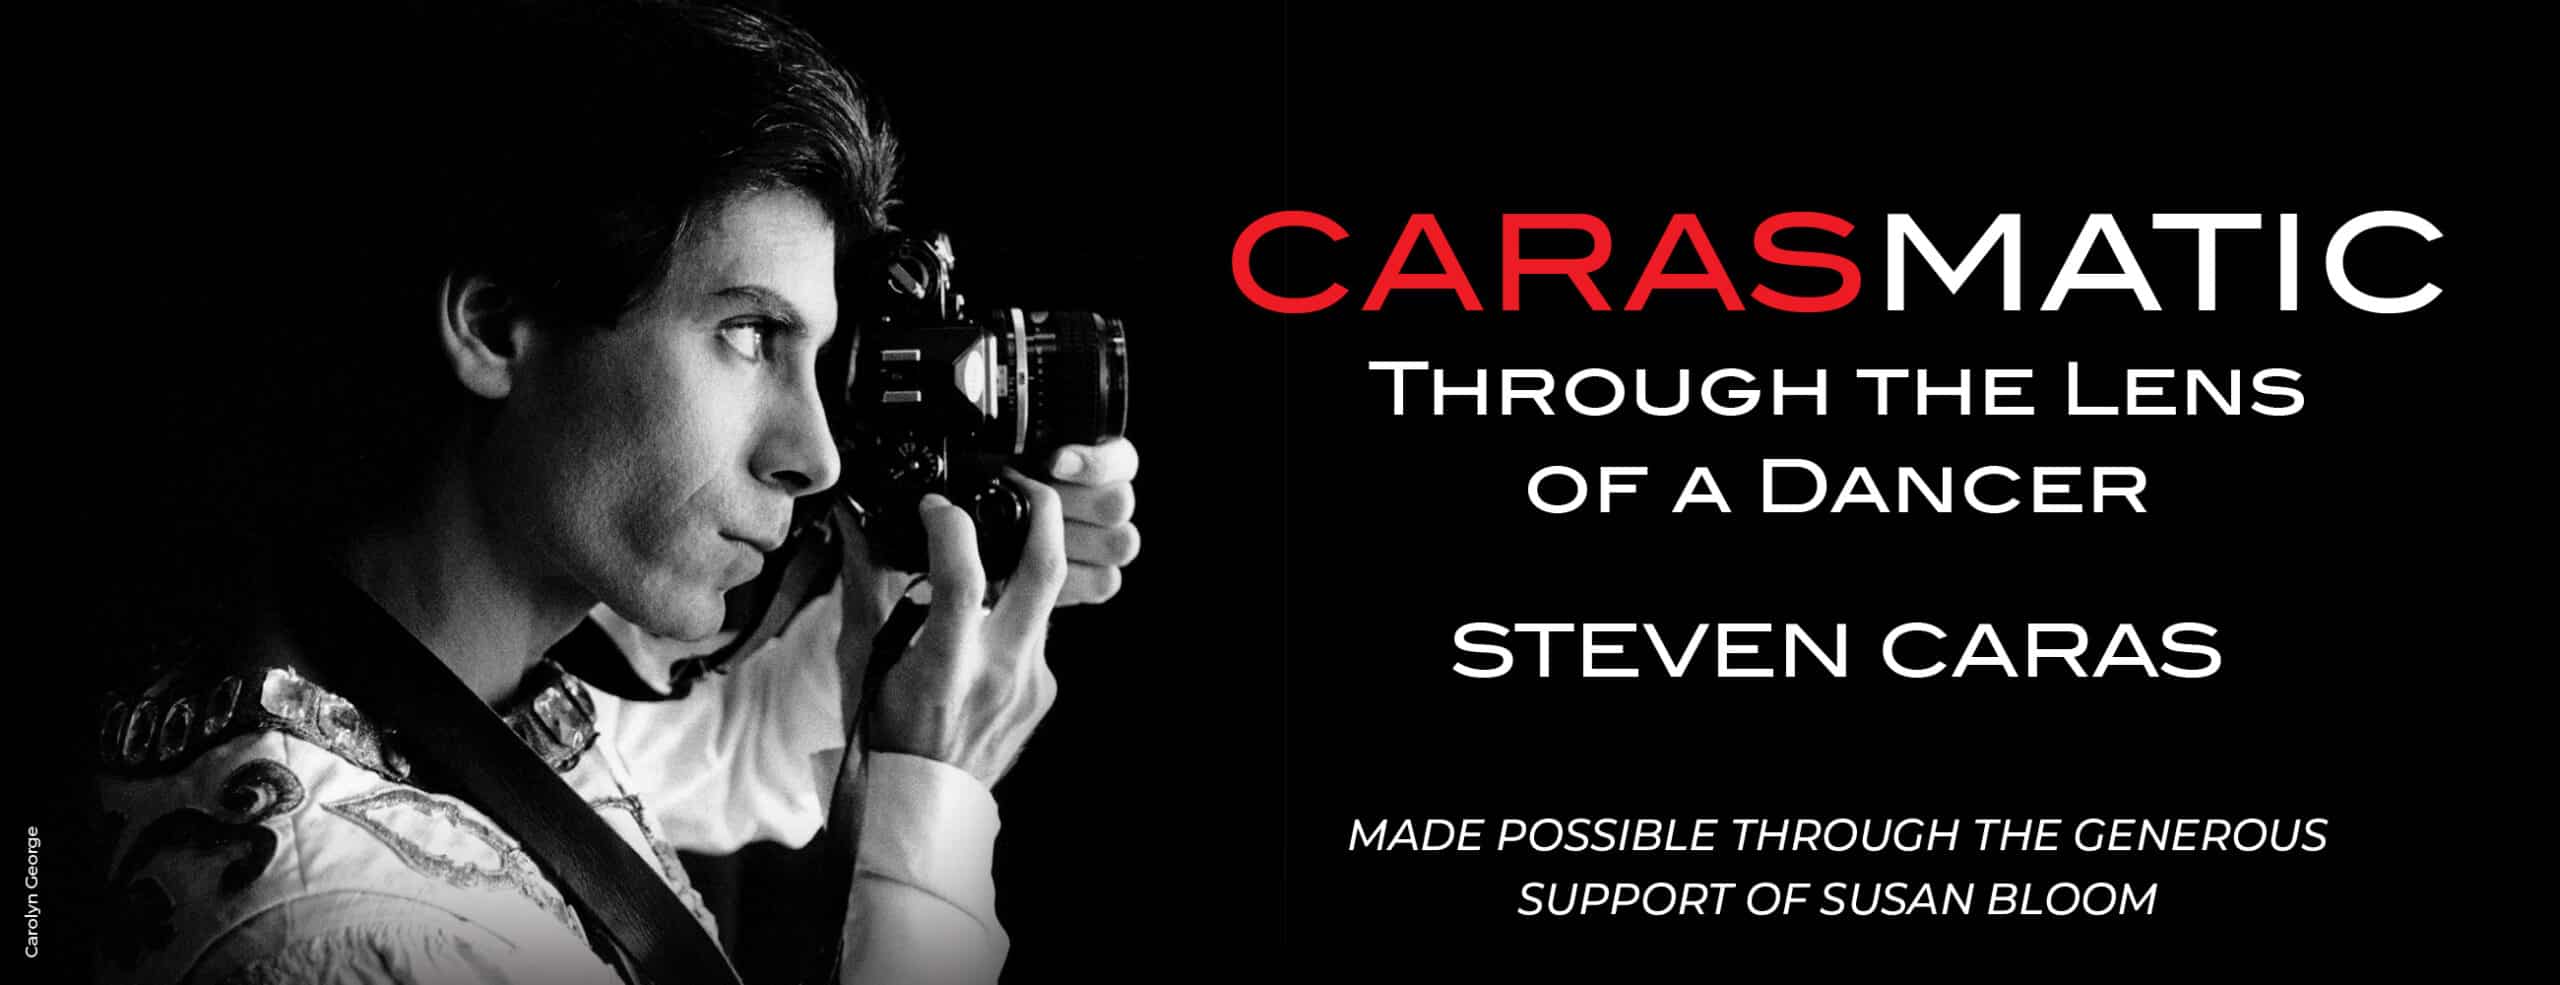 Carasmatic: Steven Caras Photography